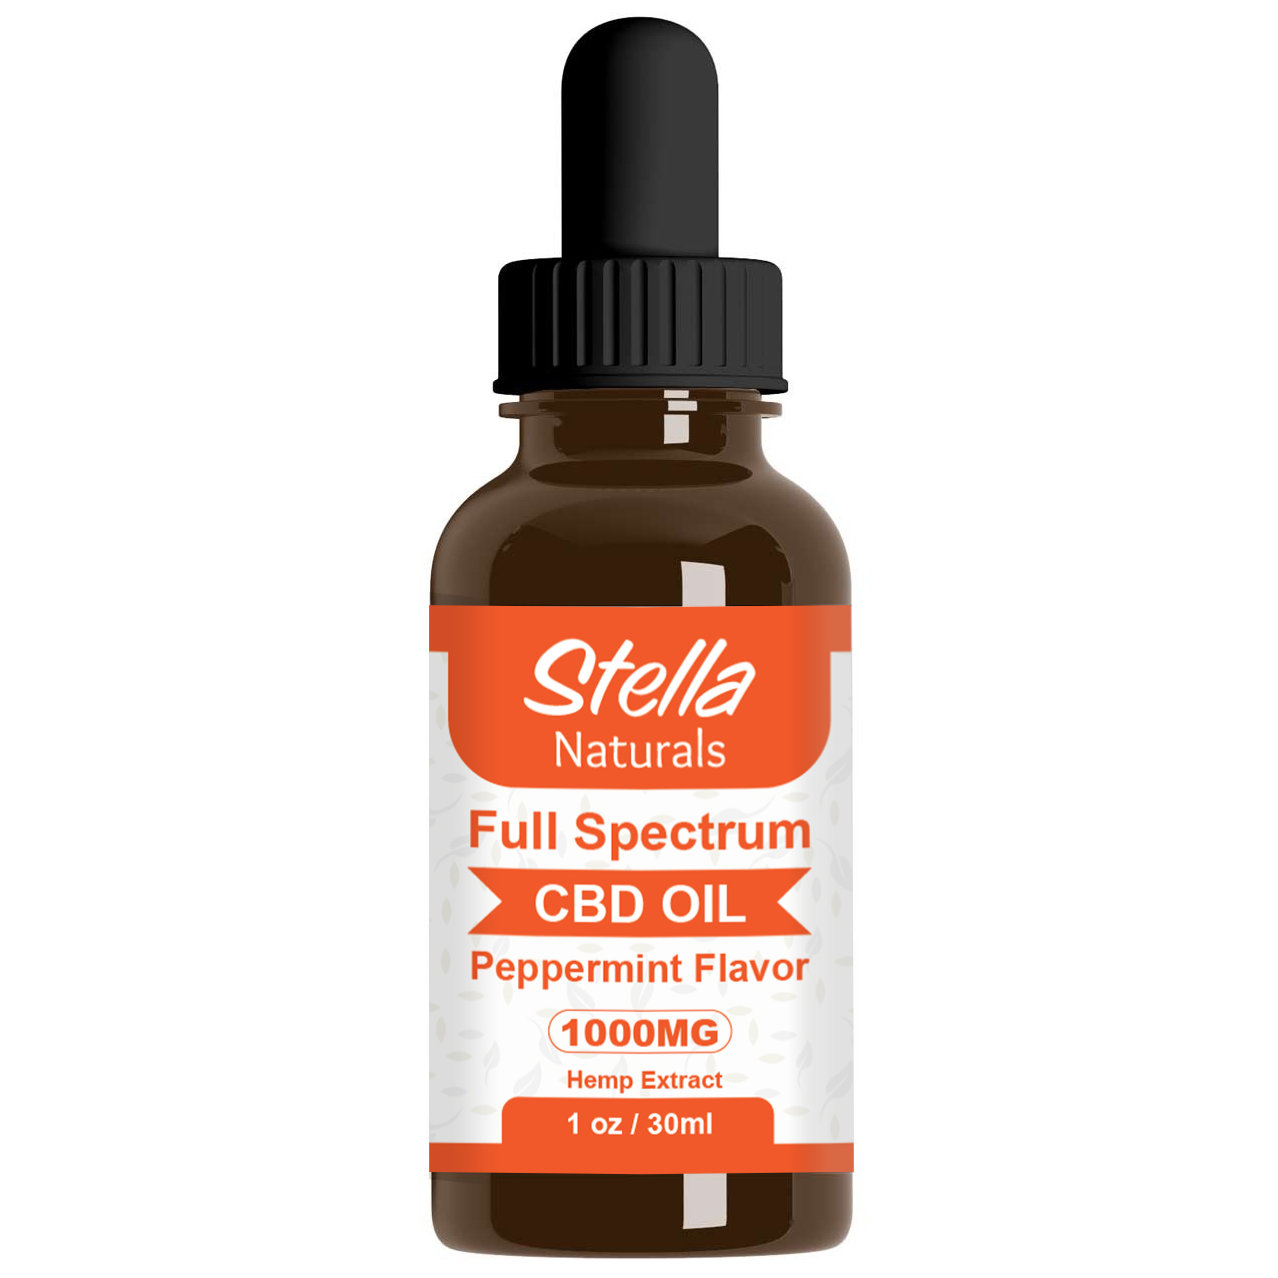 Stella CBD oil Full Spectrum 1000MG